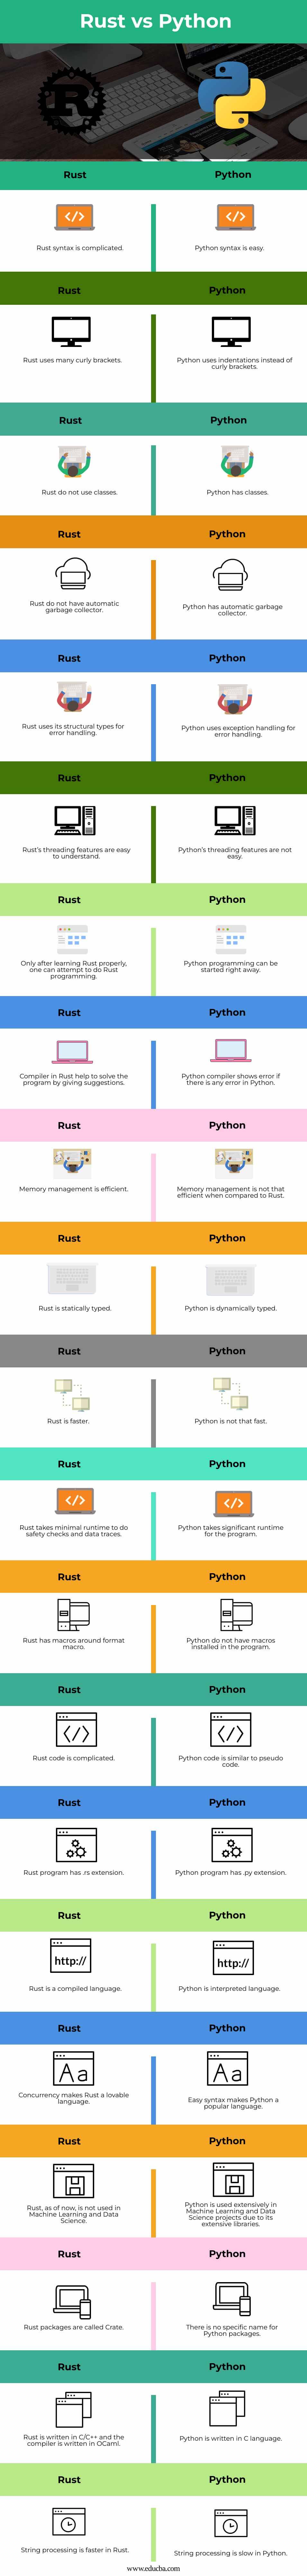 Rust-vs-Python-info